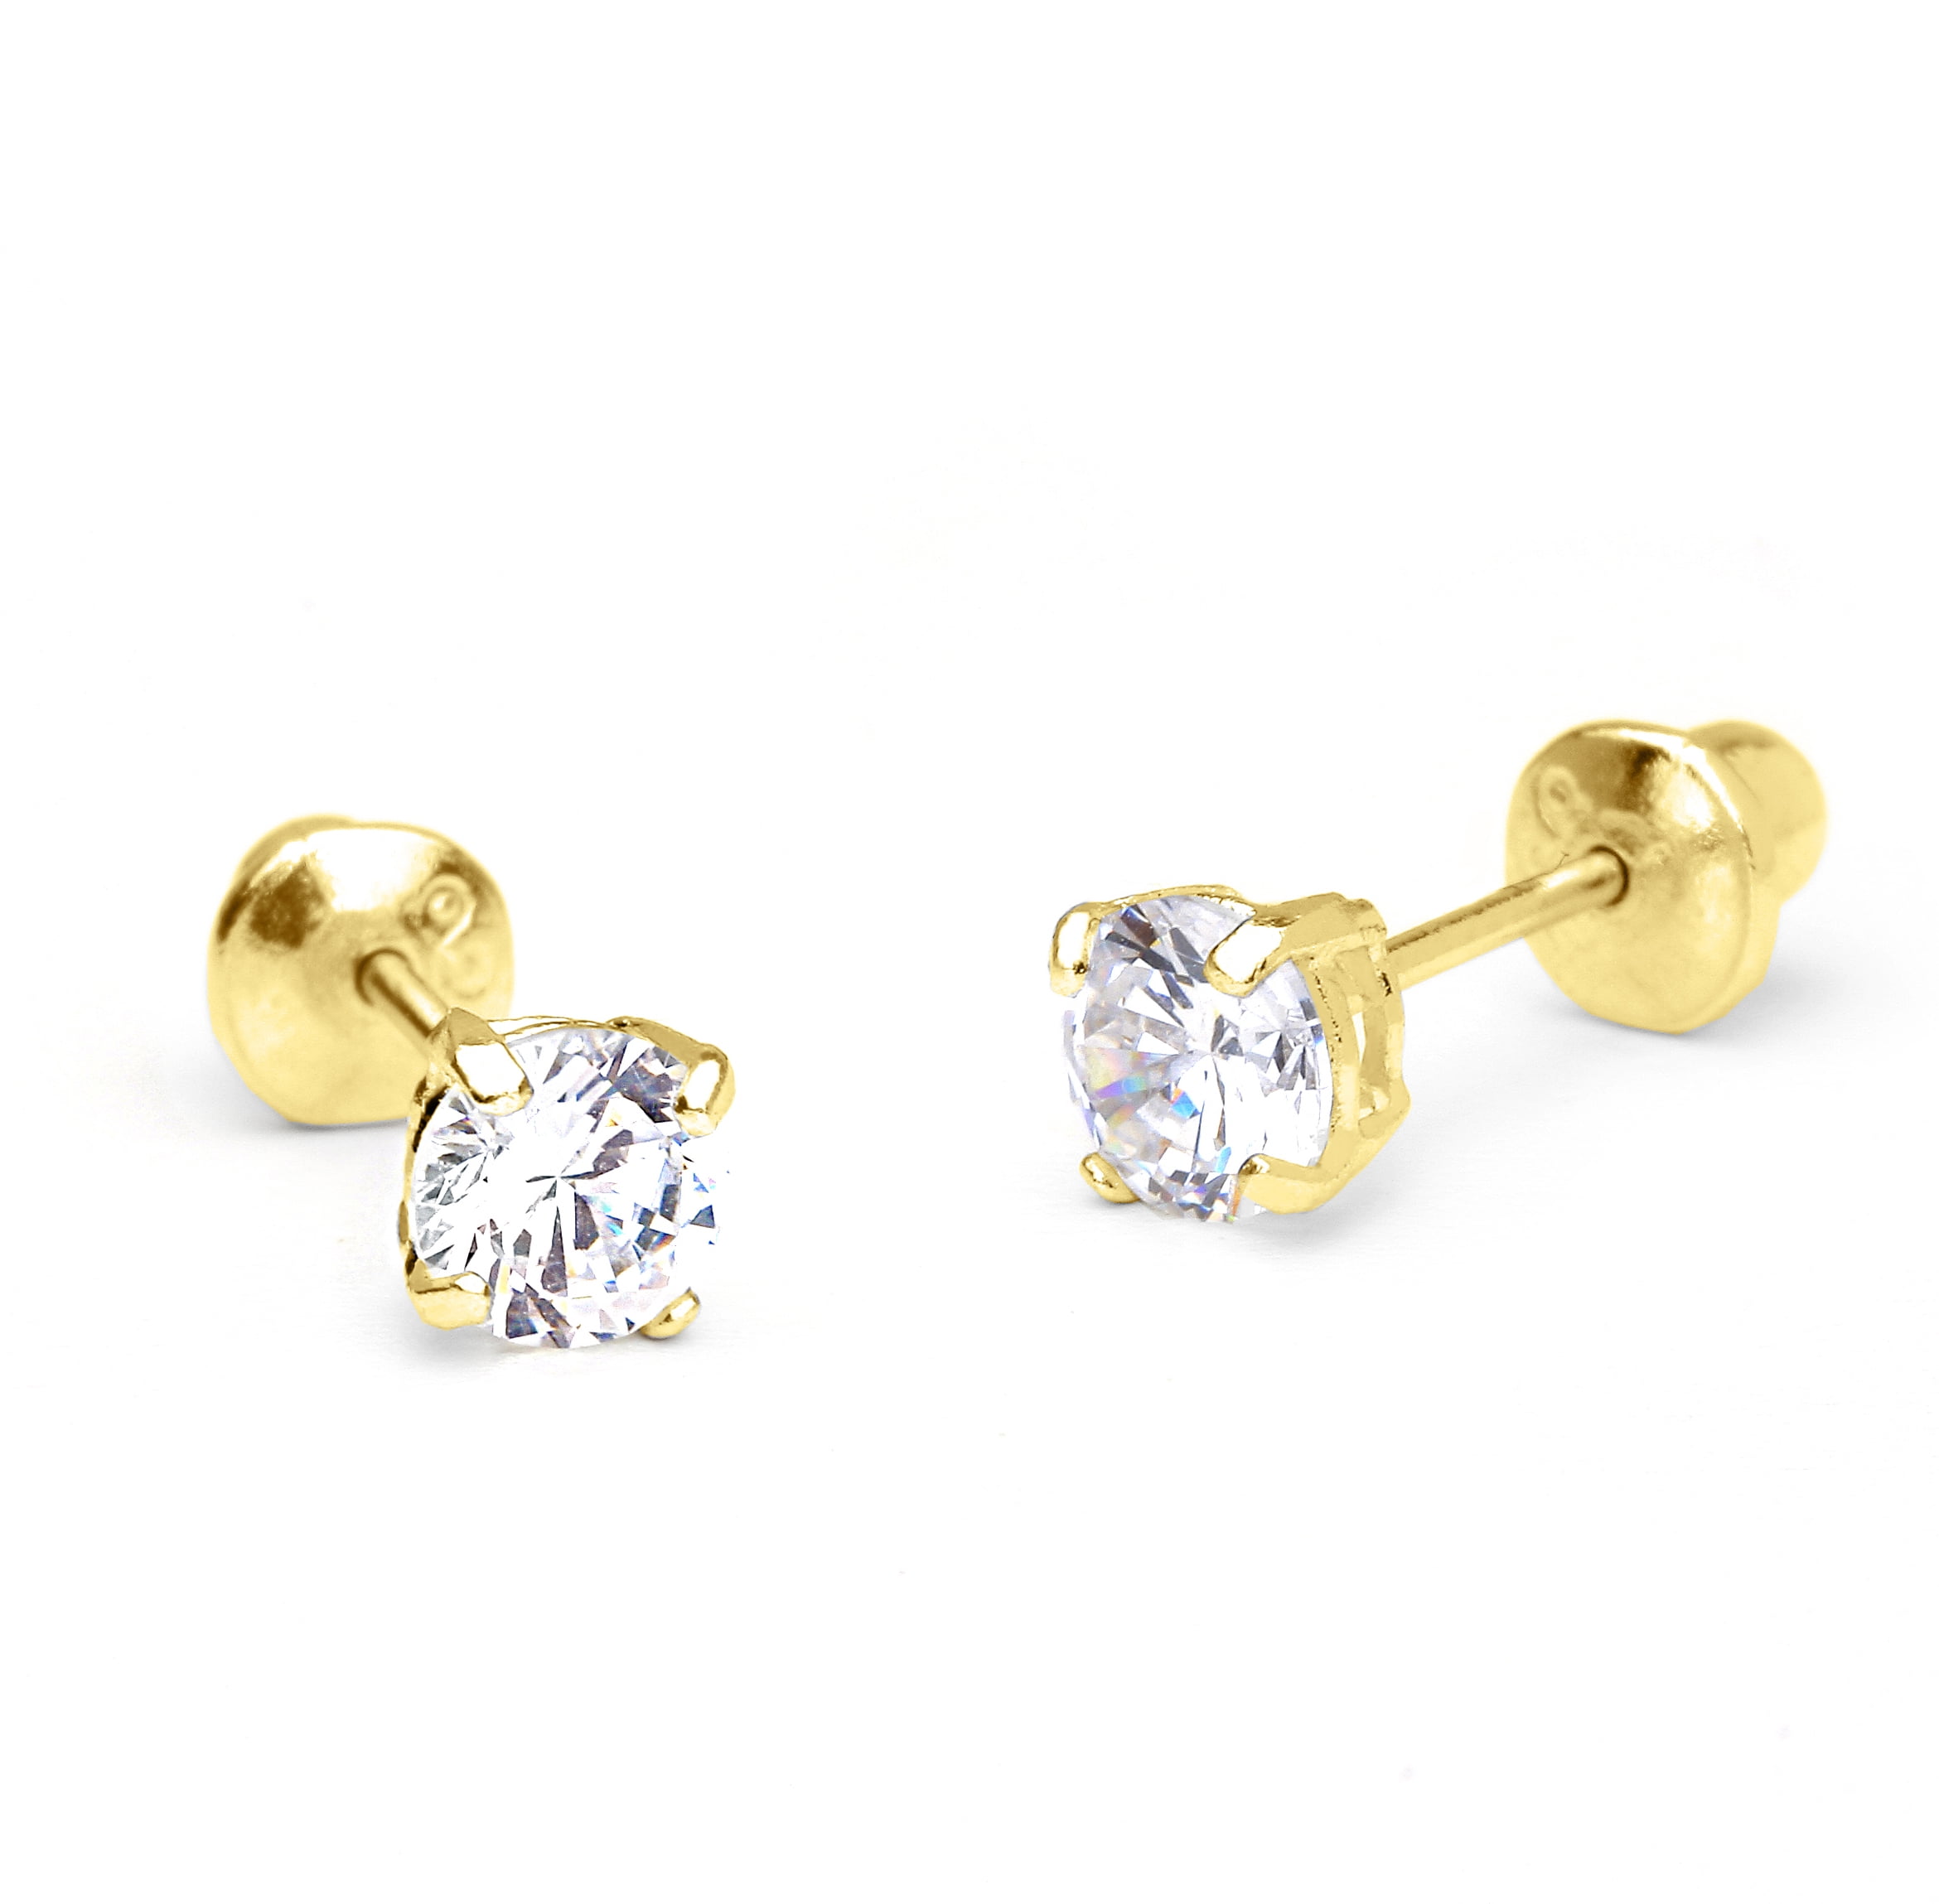 14K Yellow Gold Jewelry J-Hoop Earrings Solid 4 mm 8 mm Madi K CZ Childrens Three Stone Post Earrings